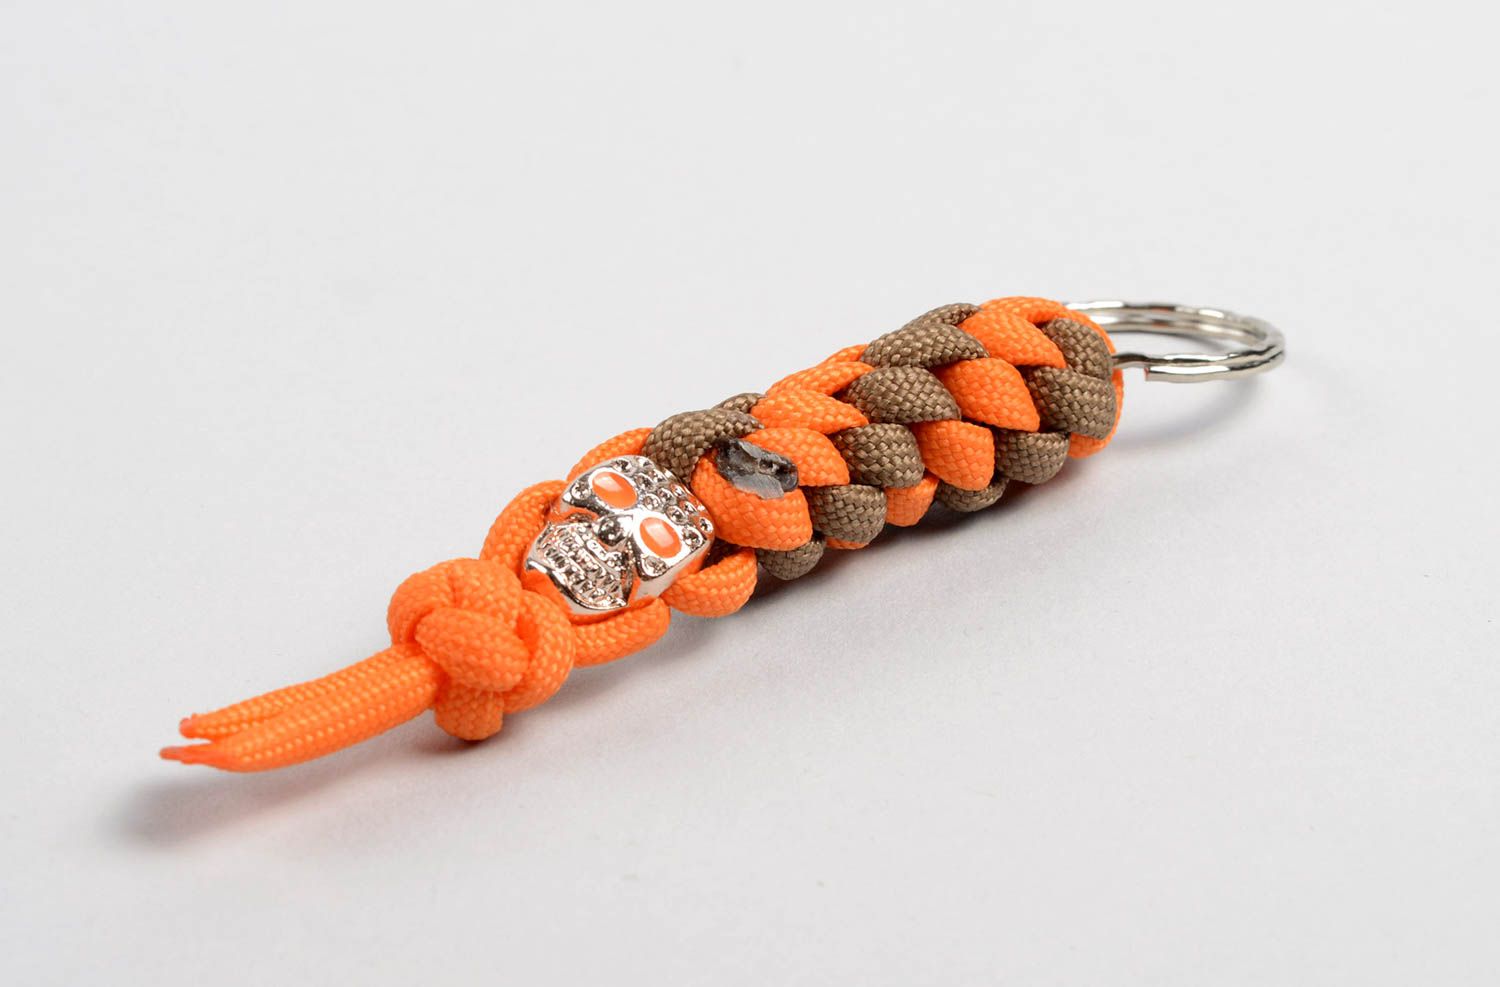 Unusual handmade cord keychain best keychain design cool keyrings gift ideas photo 2